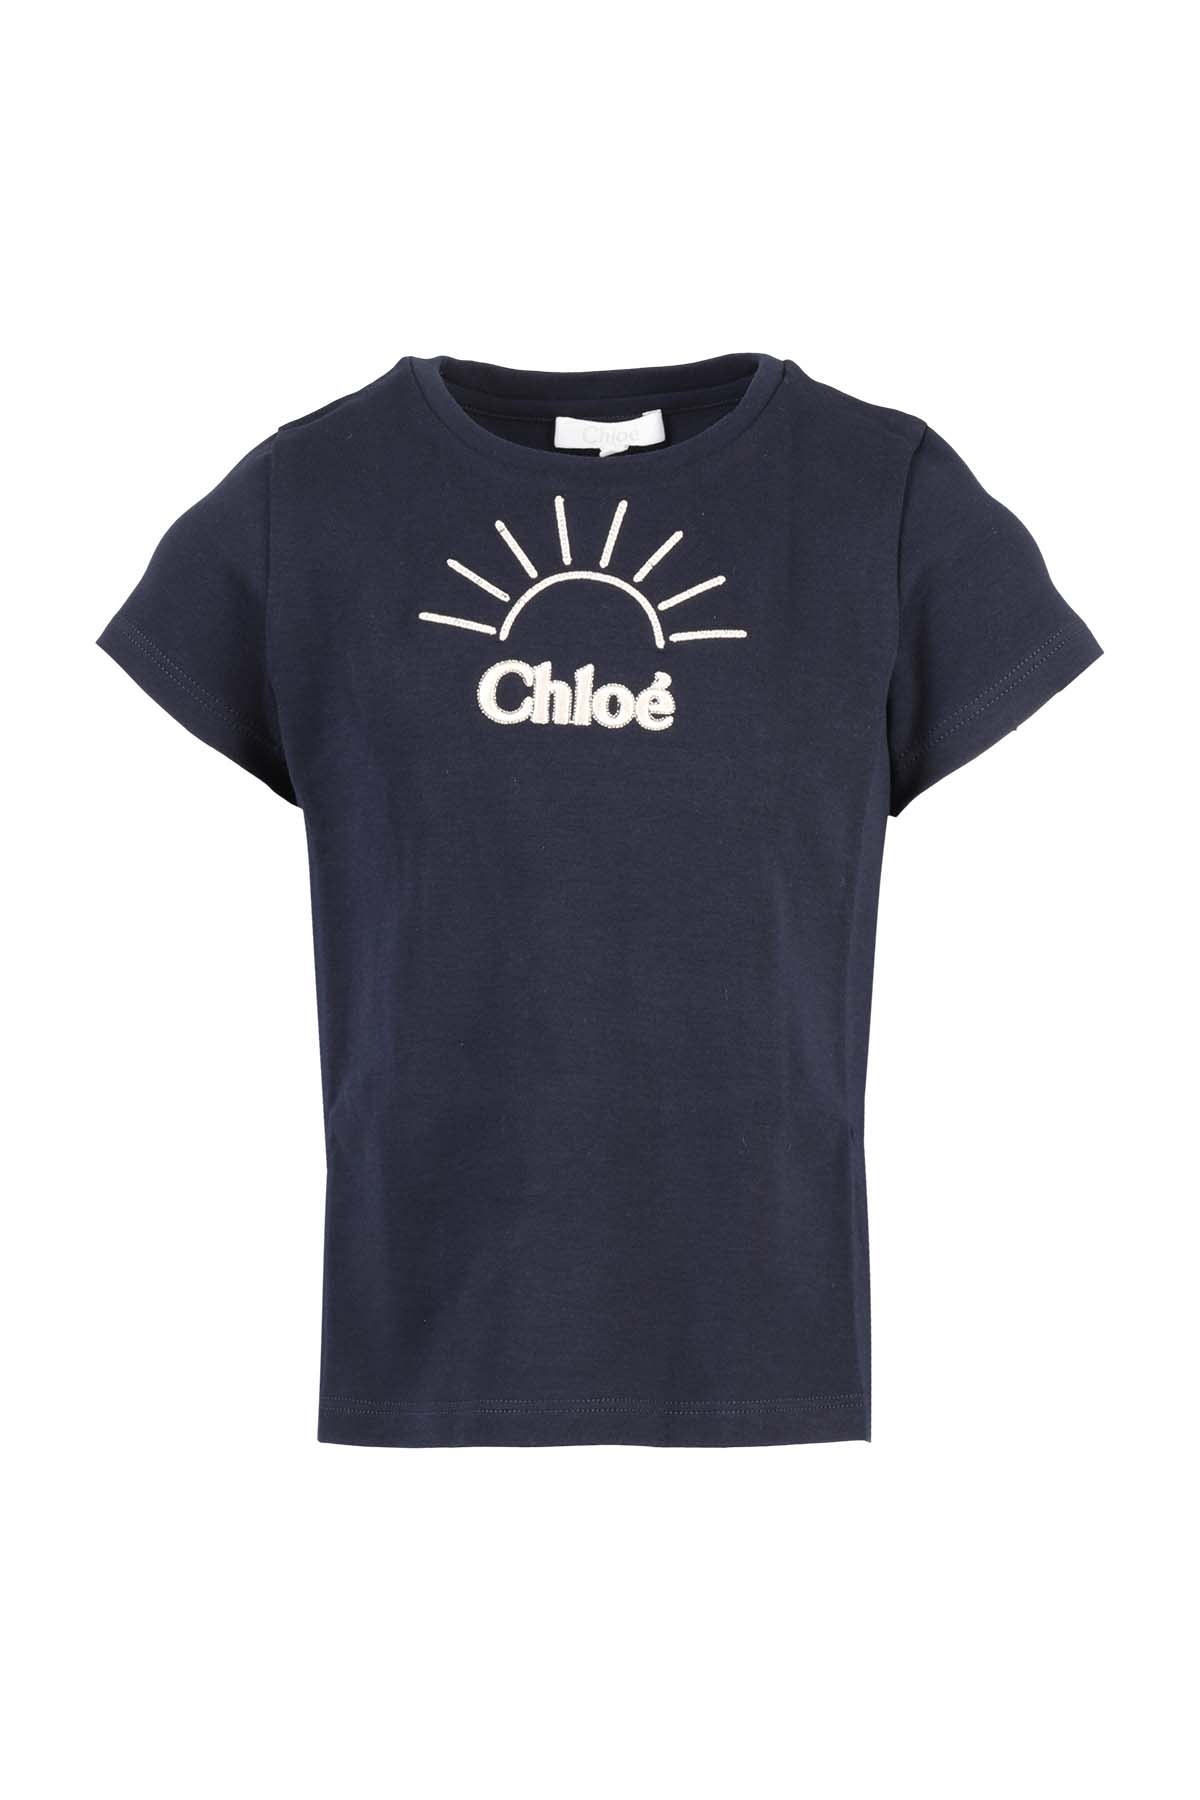 Chloé Kids' T-shirt In Marine